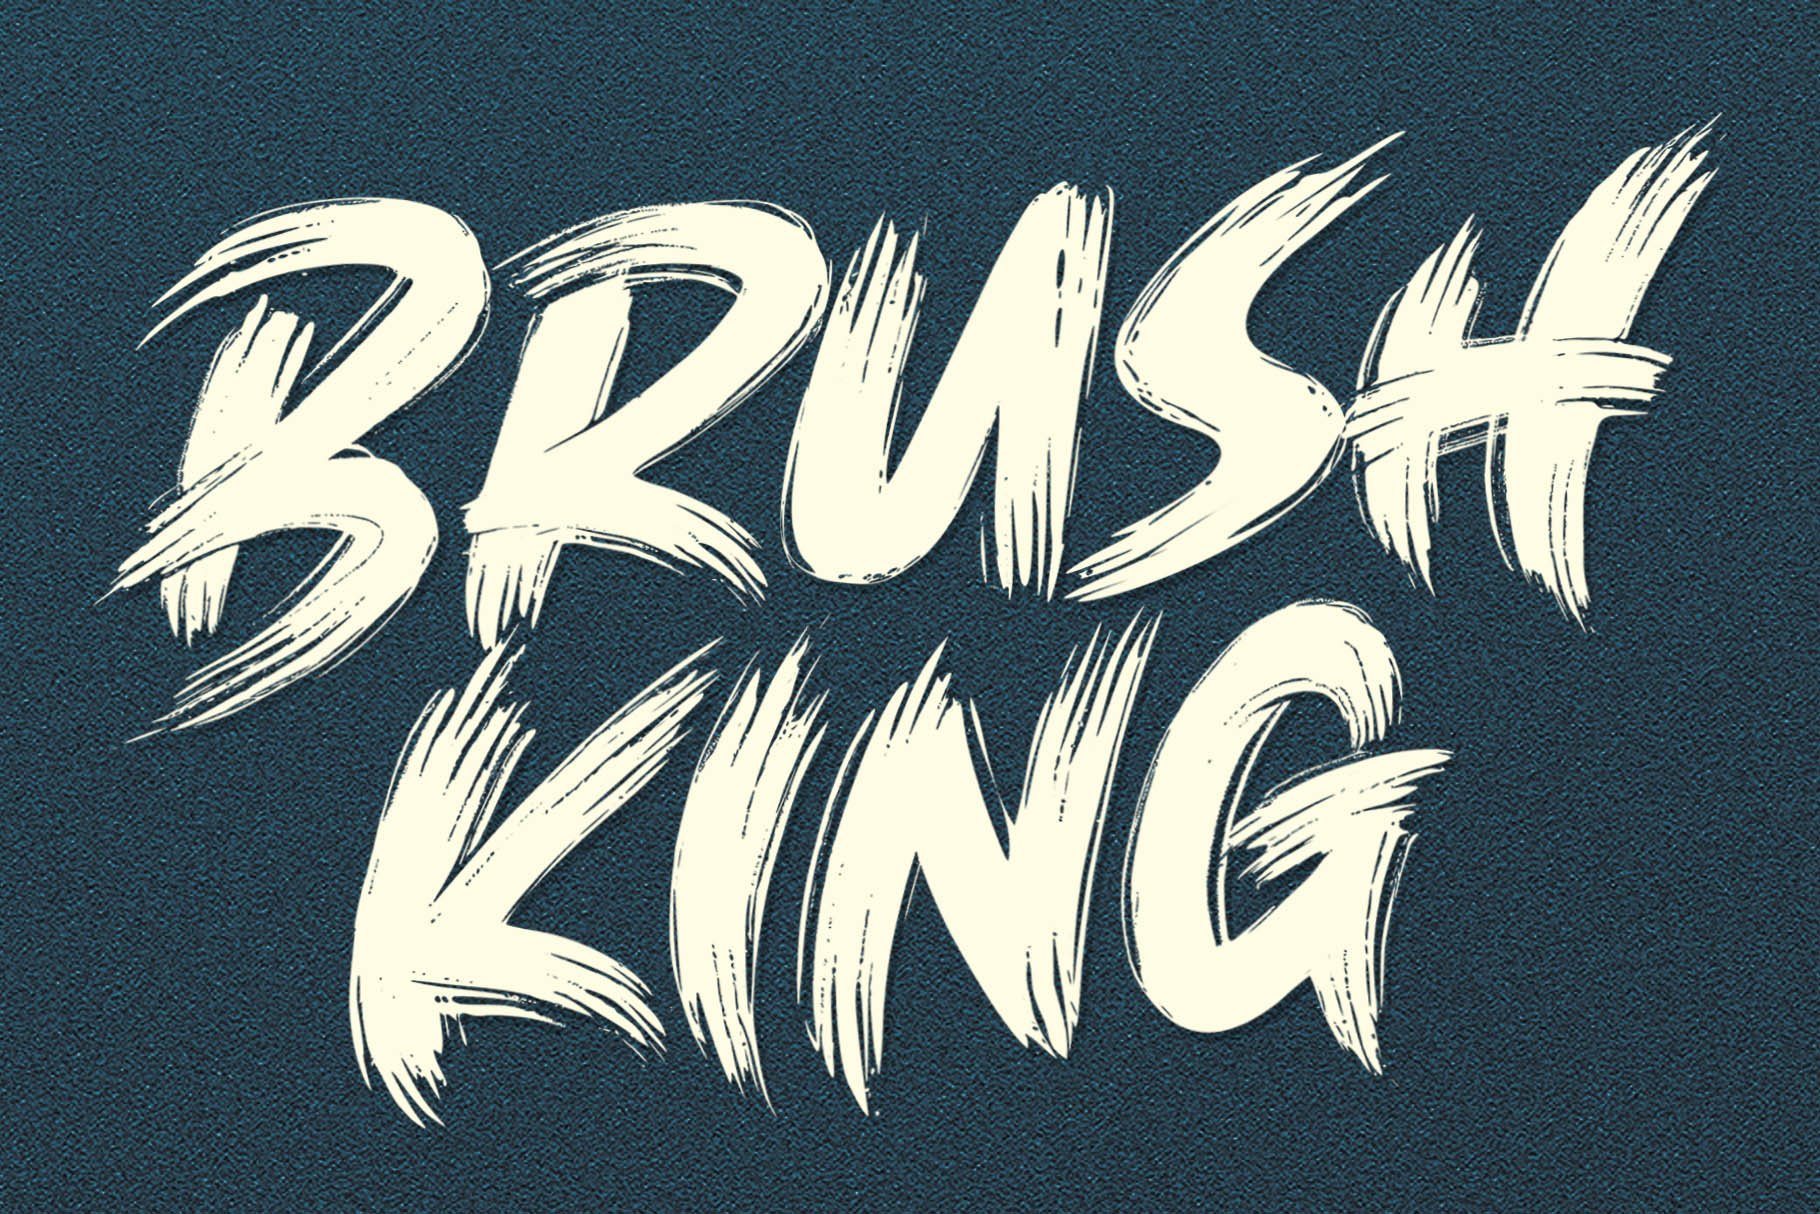 SALE! BRUSH KING / Brush Font cover image.